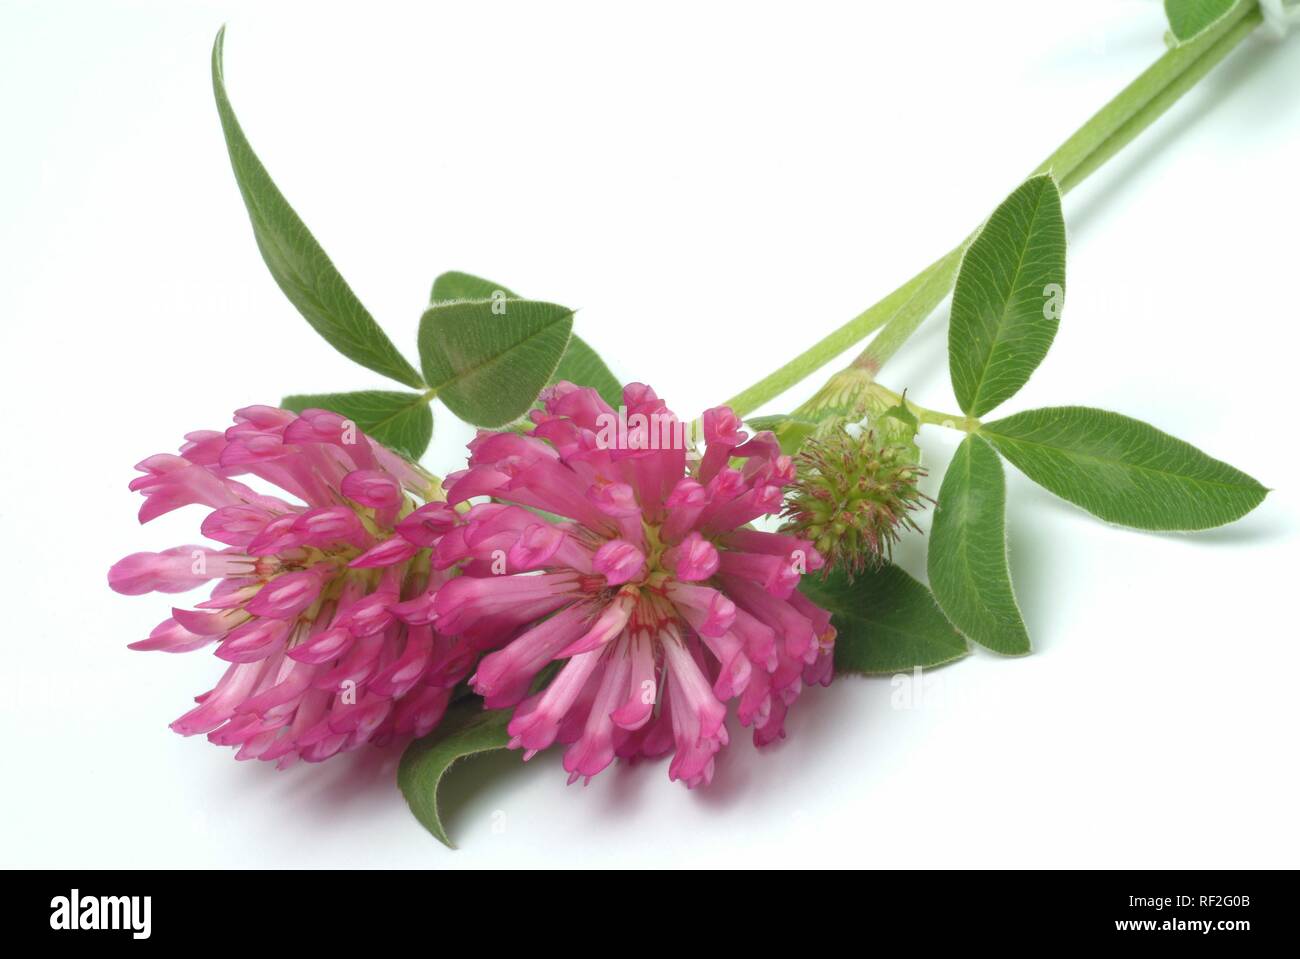 Red Clovers (Trifolium pratense), medicinal plant Stock Photo